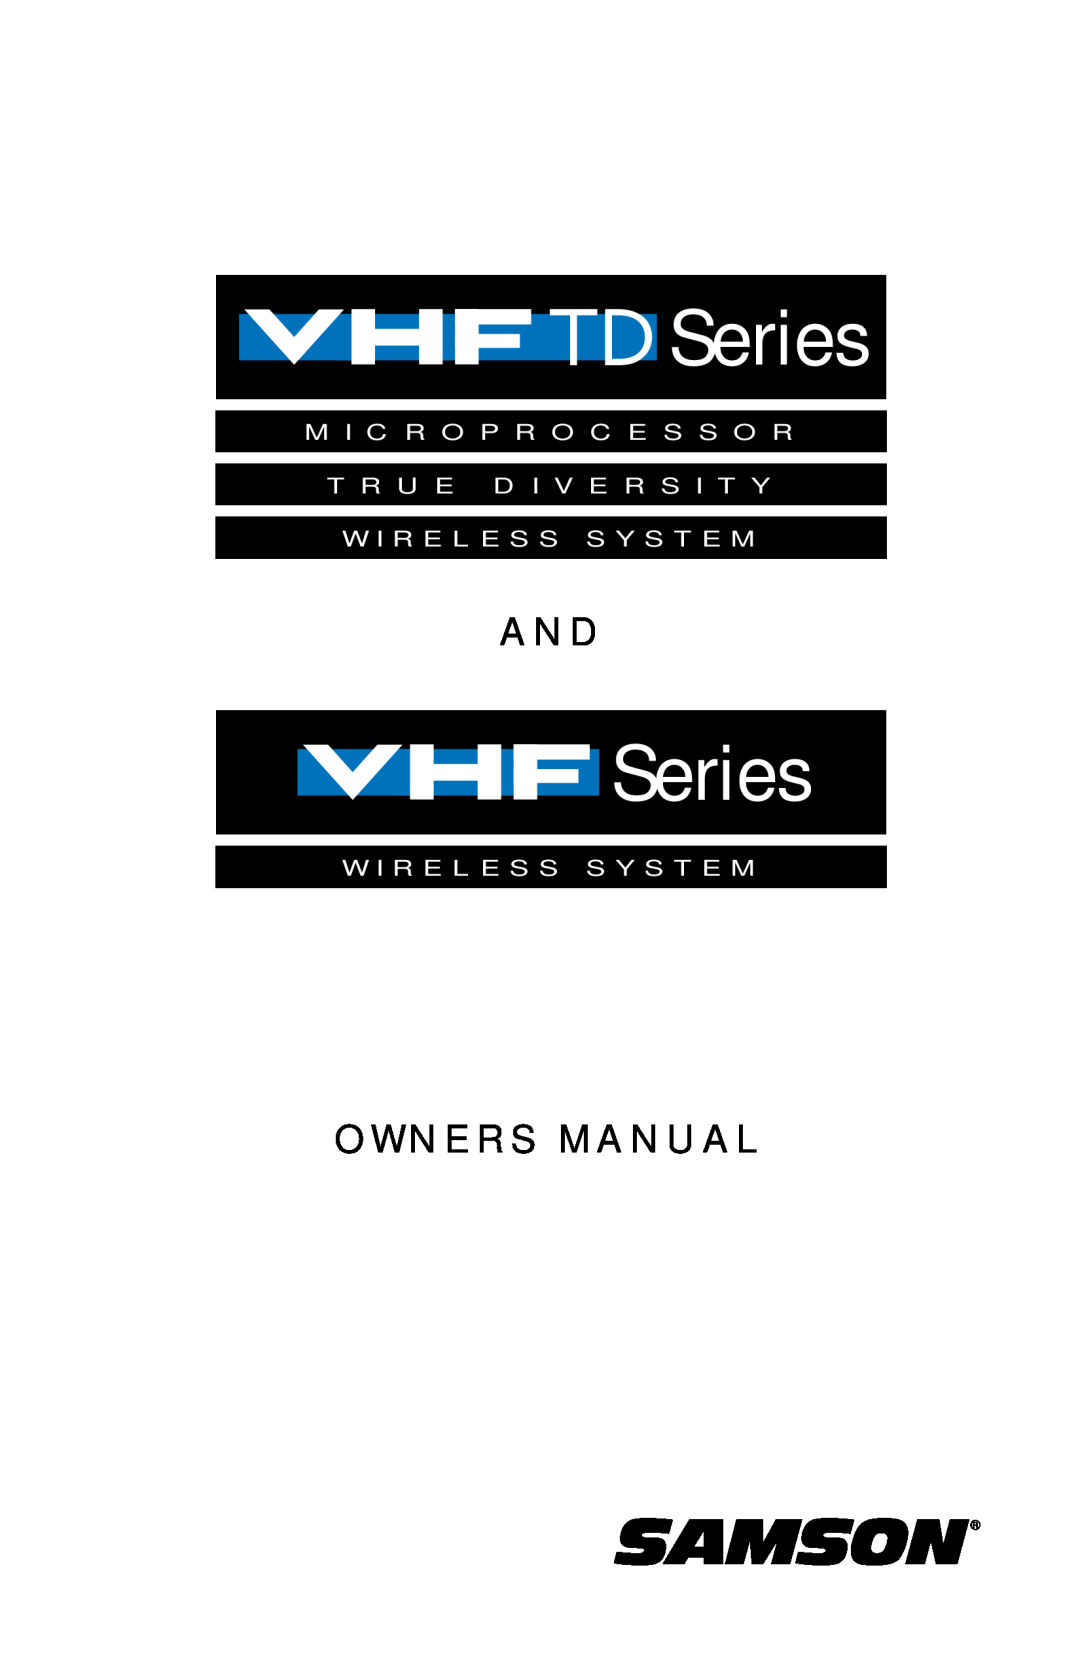 Samson VHF Series, VHF TD Series owner manual W I R E L E S S S Y S T E M 